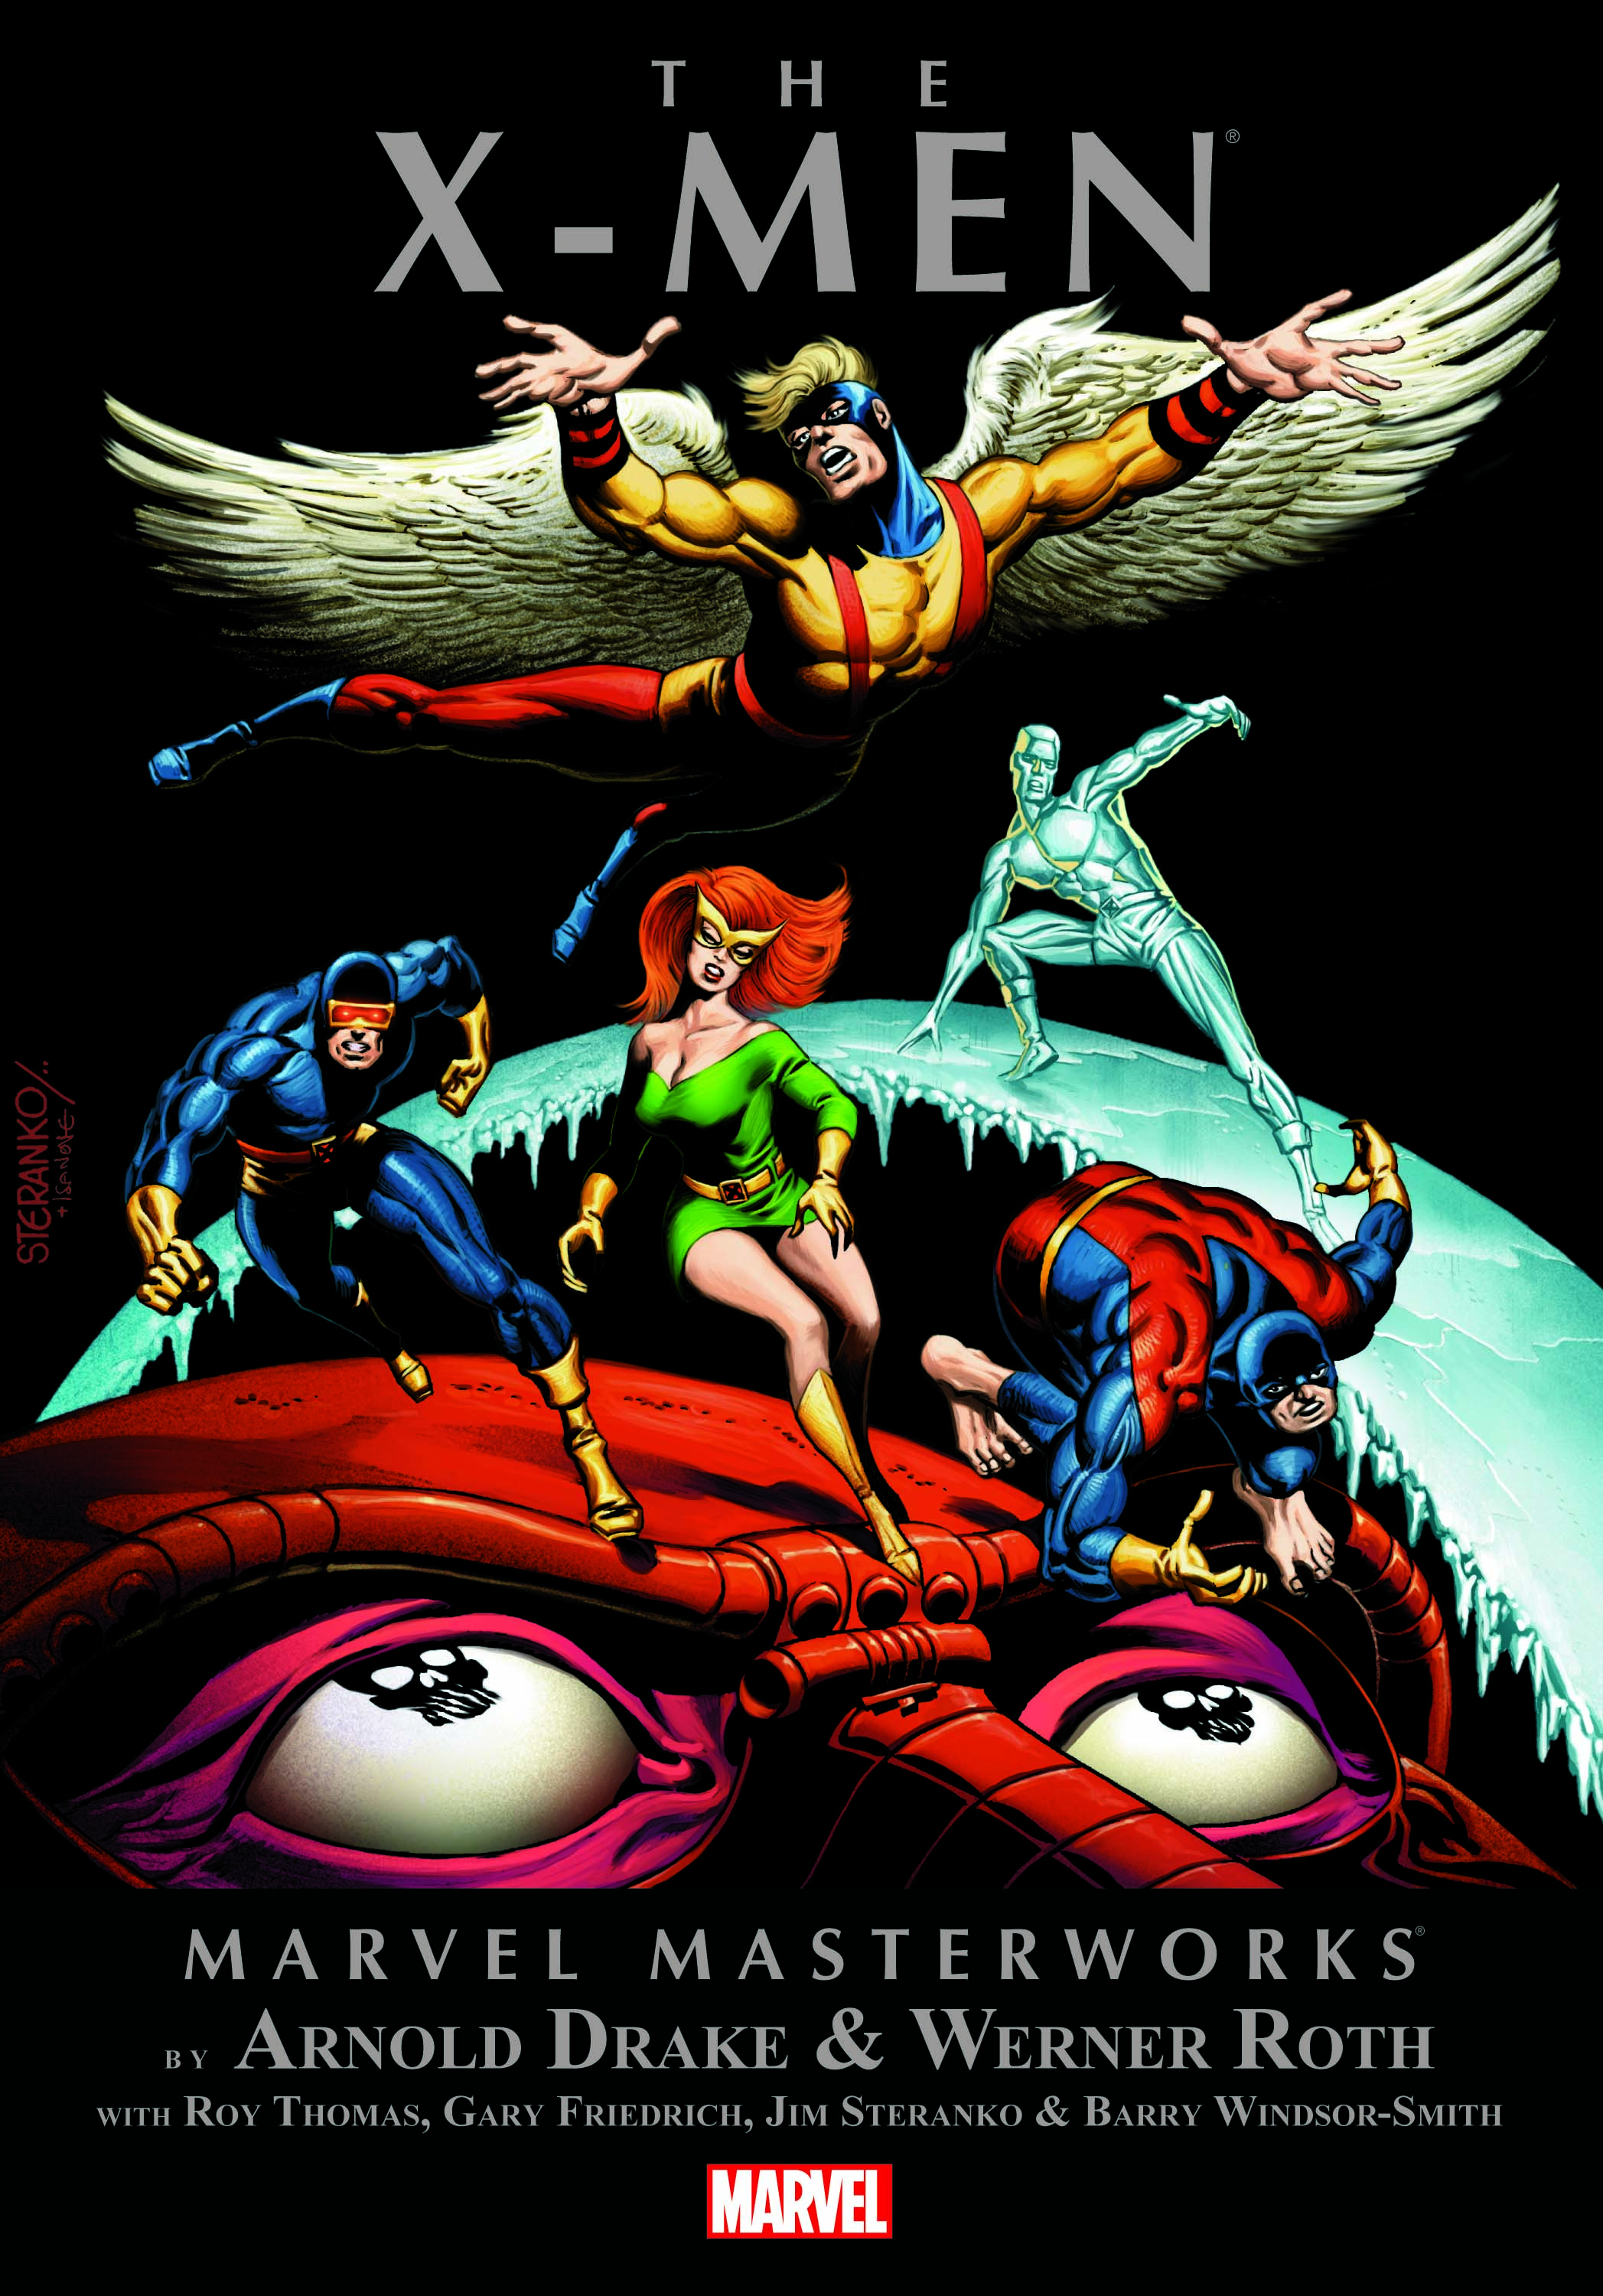 MARVEL MASTERWORKS: THE X-MEN VOL. 5 (Trade Paperback)